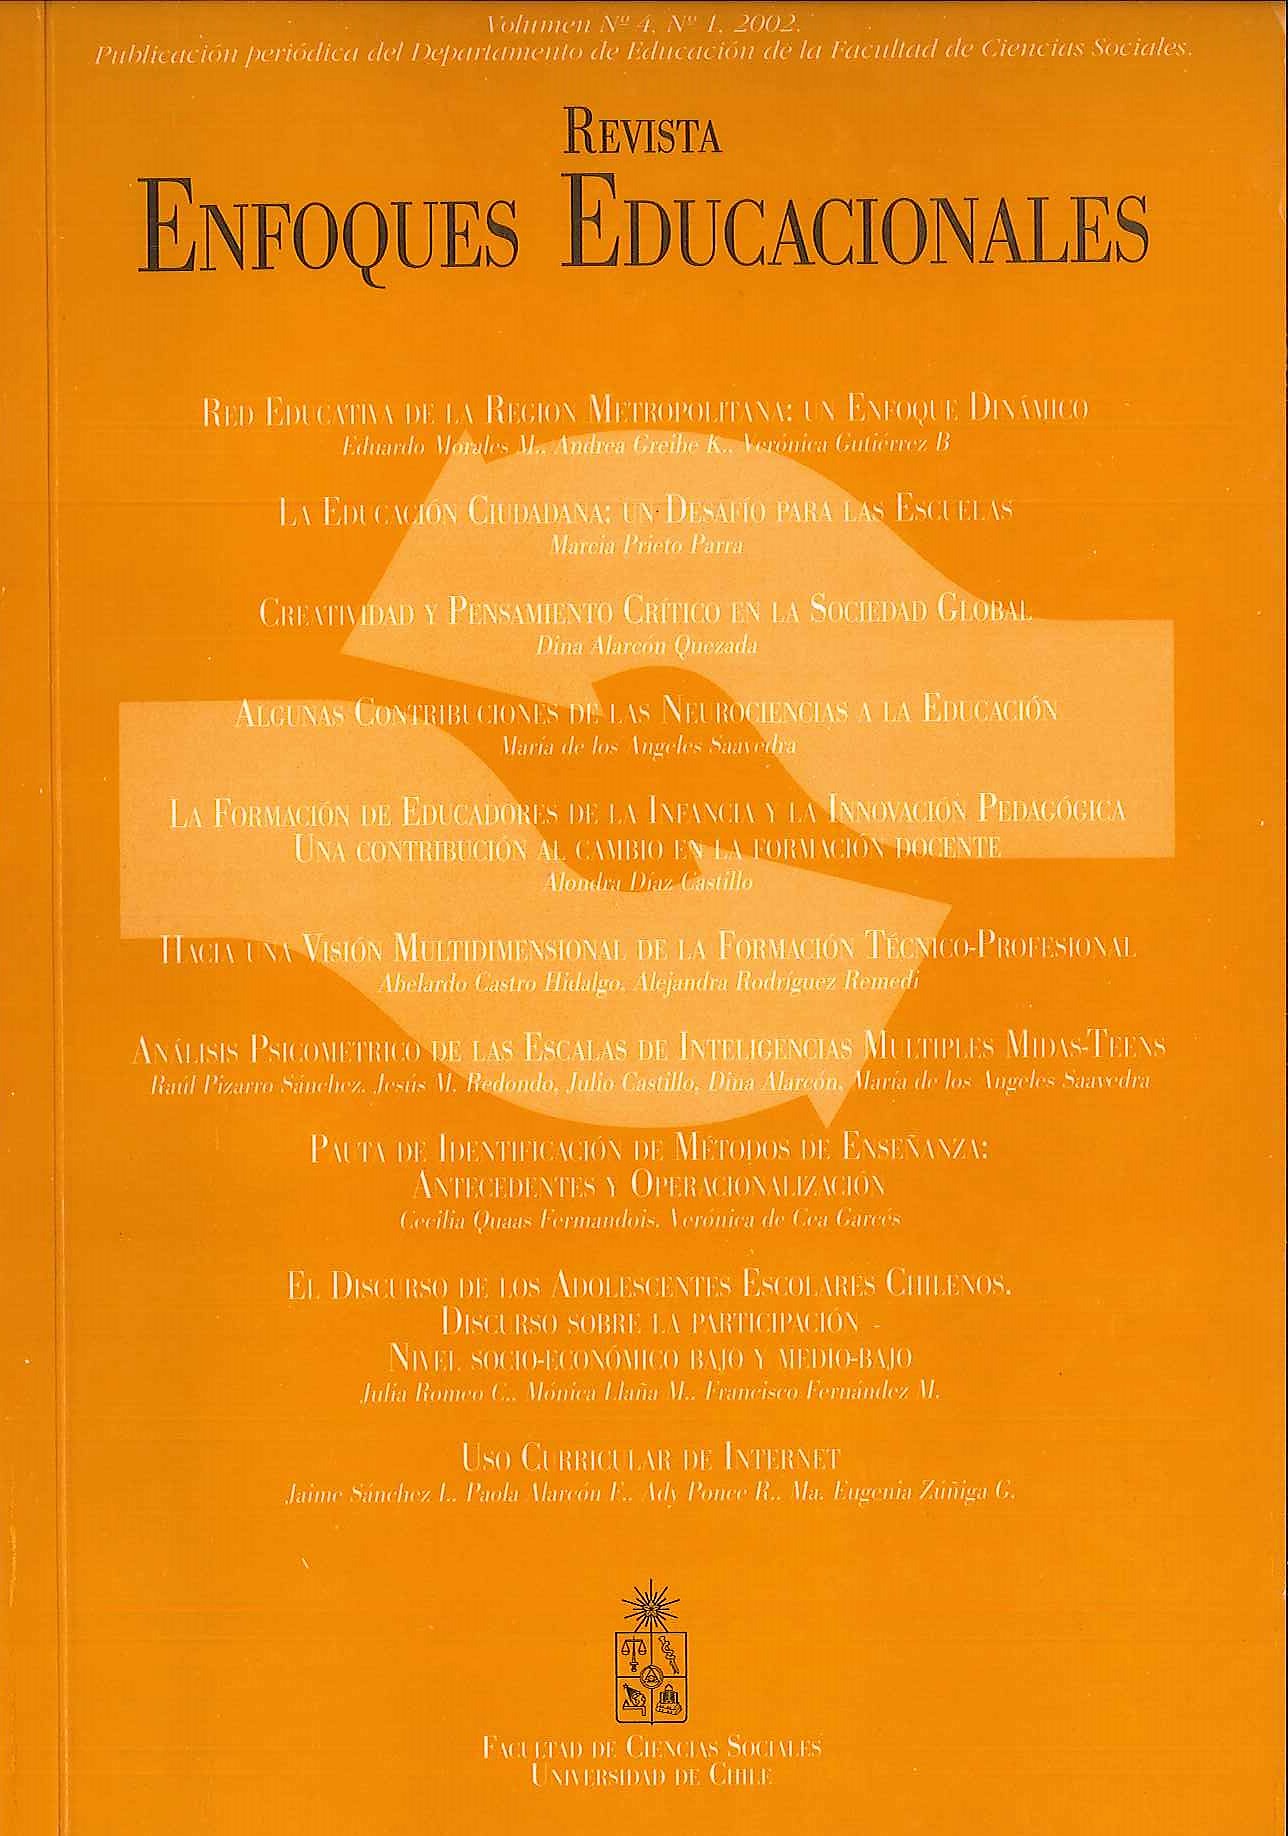 											Visualizar v. 4 n. 1 (2002)
										